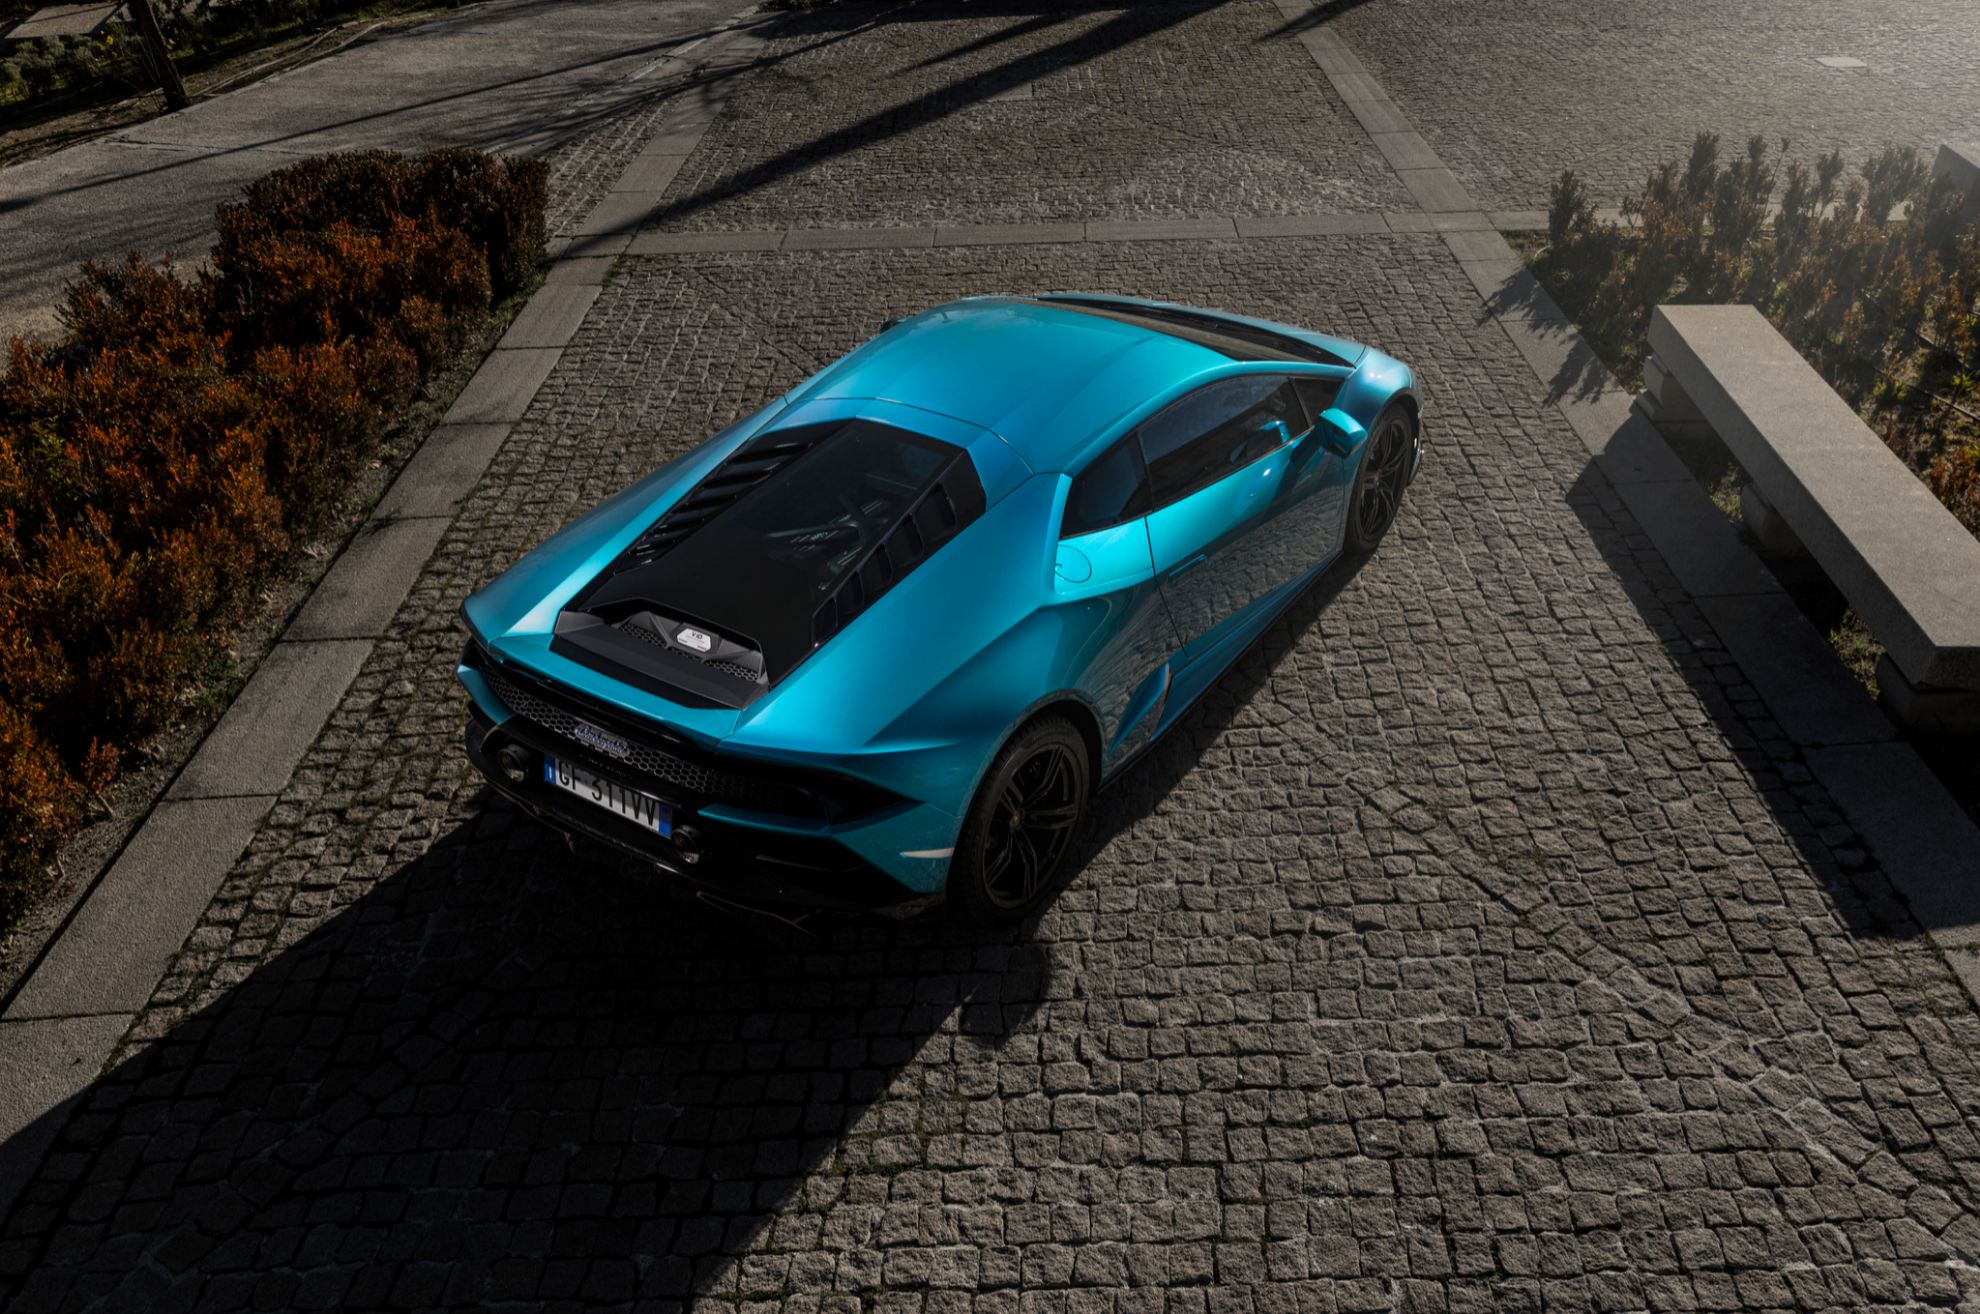 Lamborghini record de ventas 2021 - Urus - Huracan - 8.200 unidades - David Martin